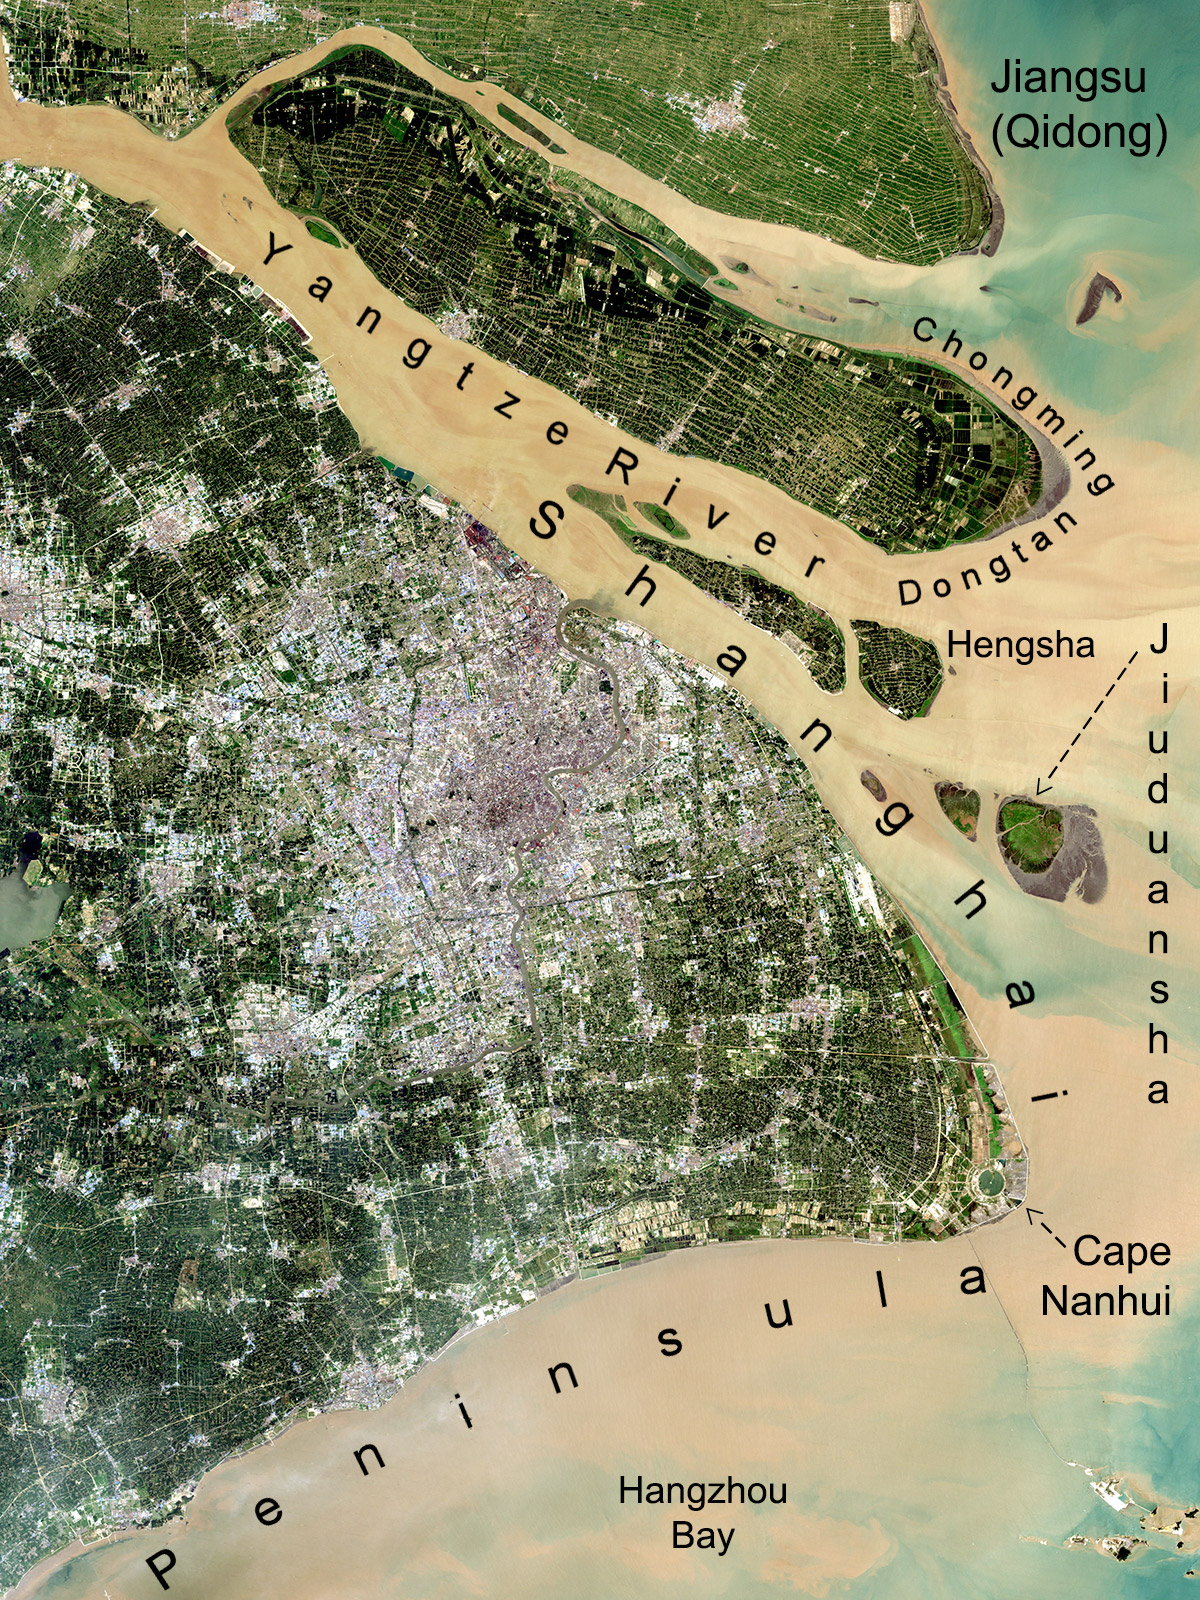 satellite view of Shanghai